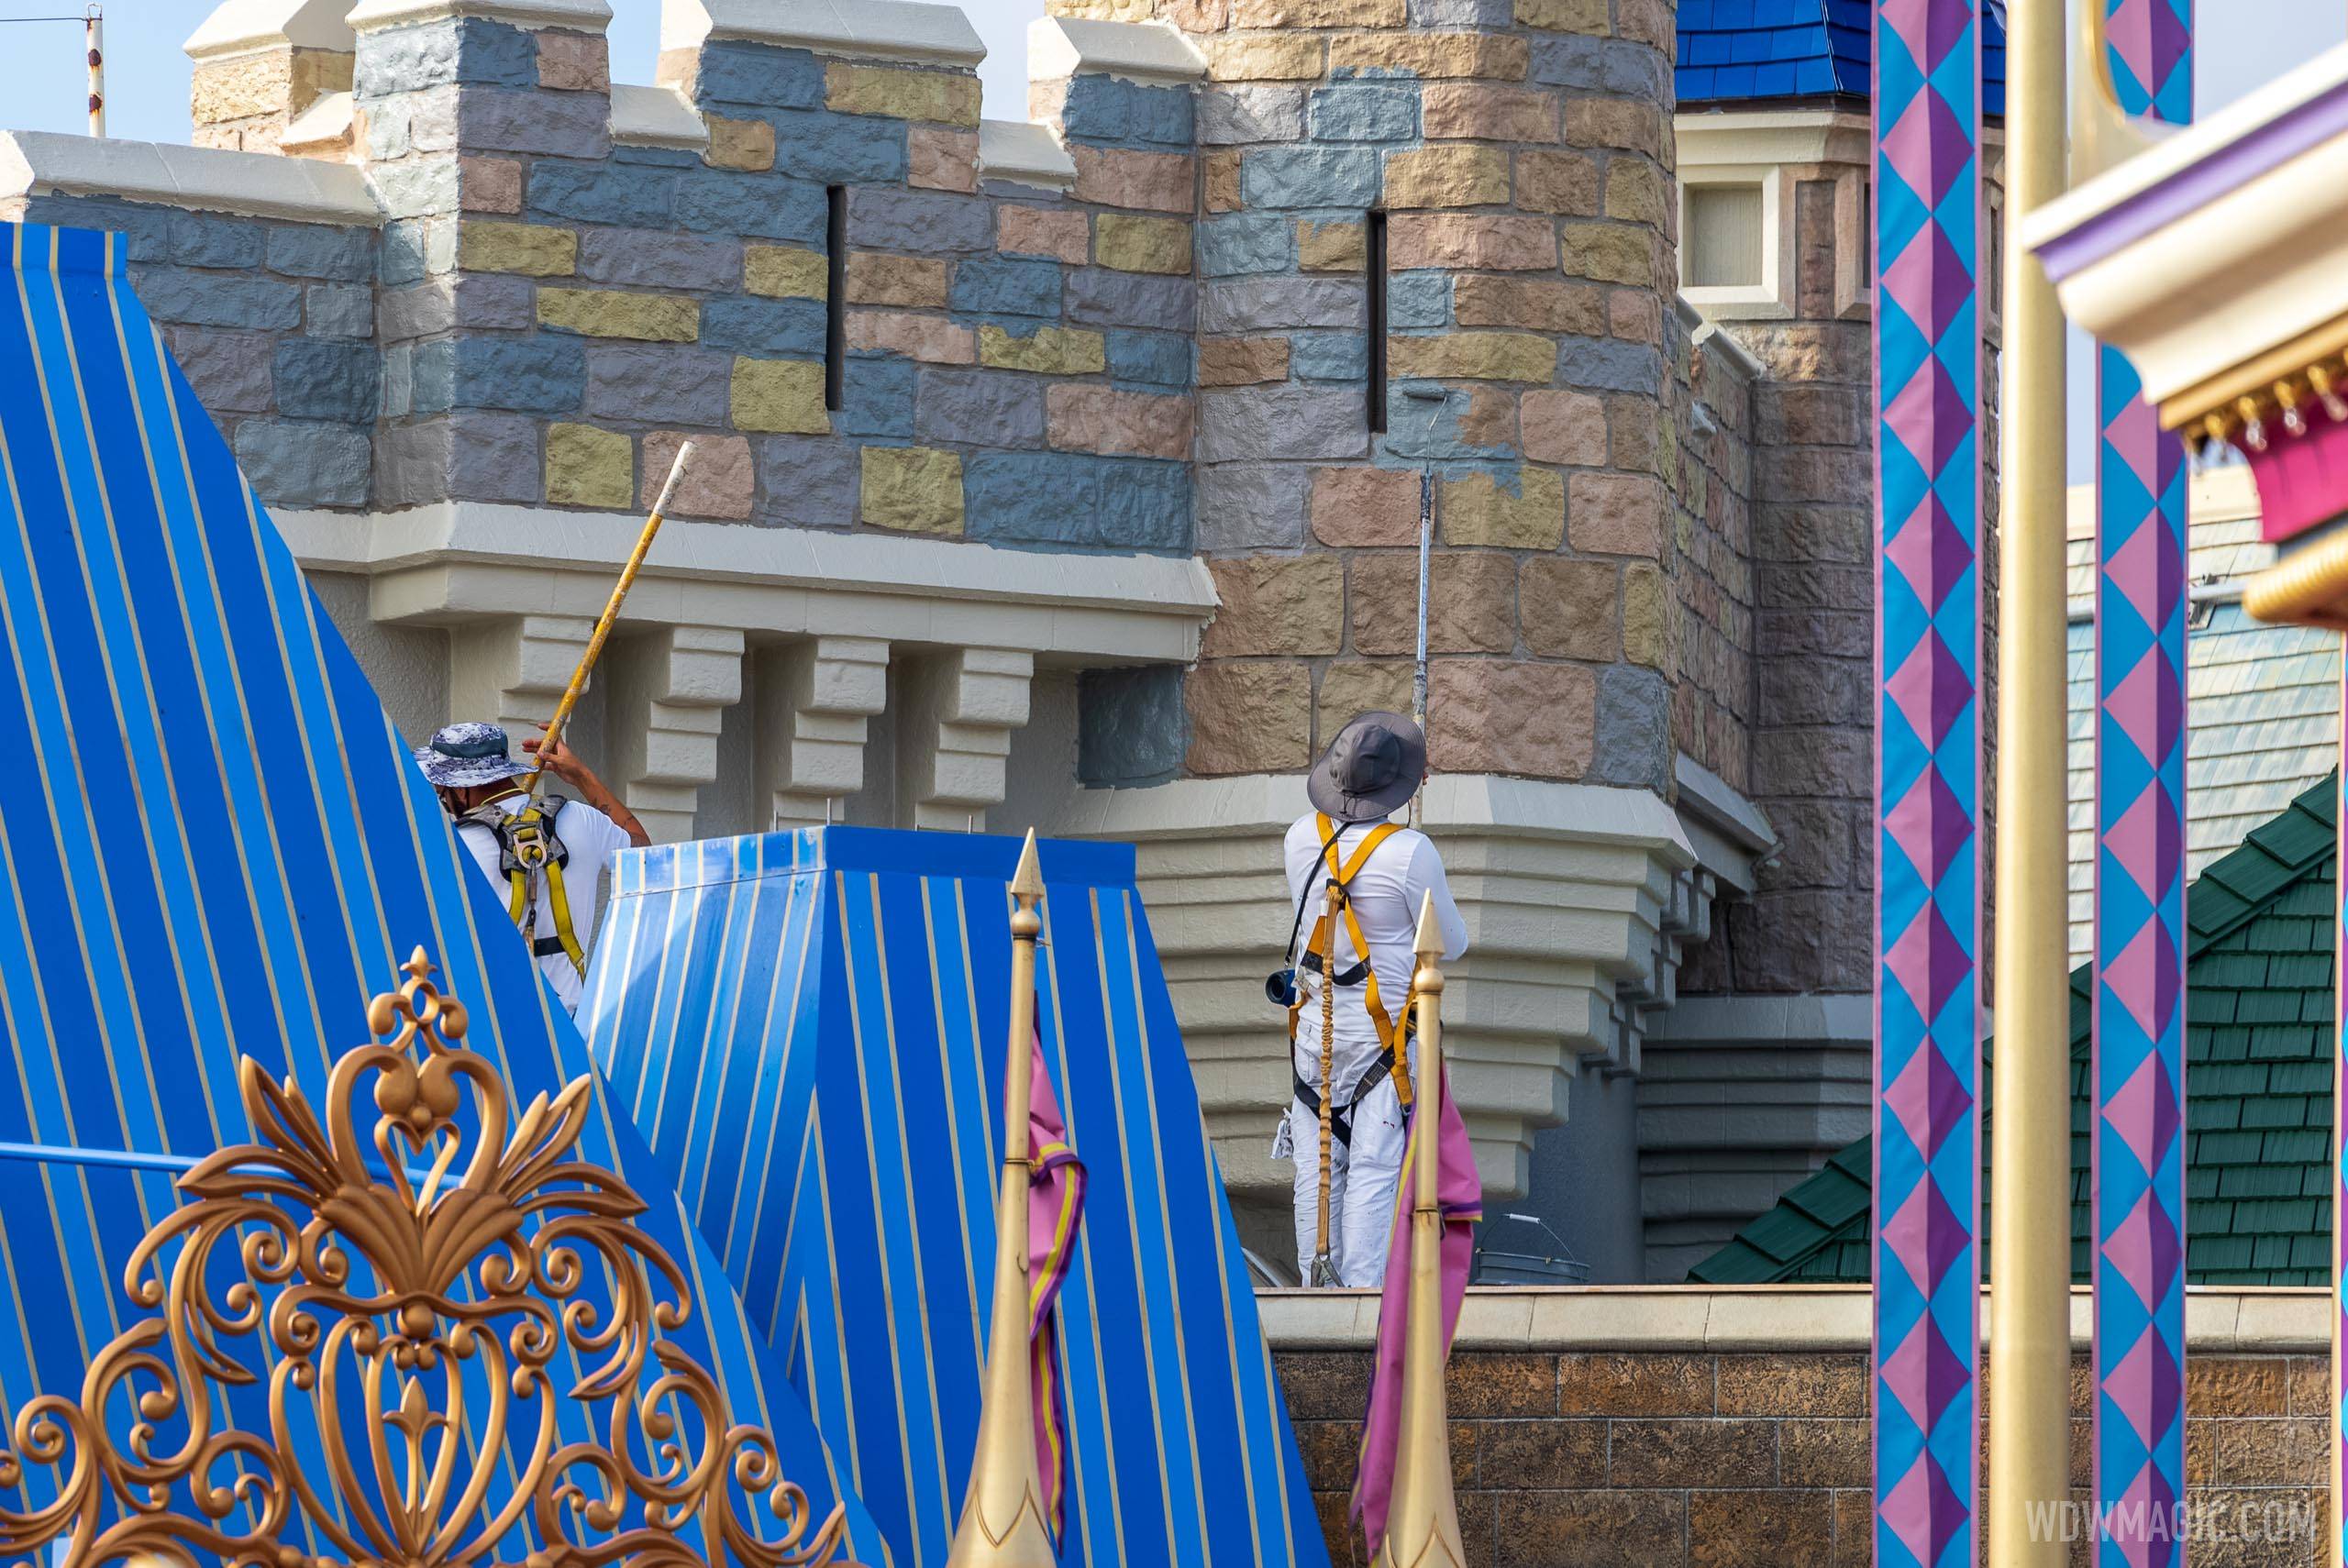 Fantasyland refurbishment moves to the castle wall above Princess Fairytale Hall at the Magic Kingdom